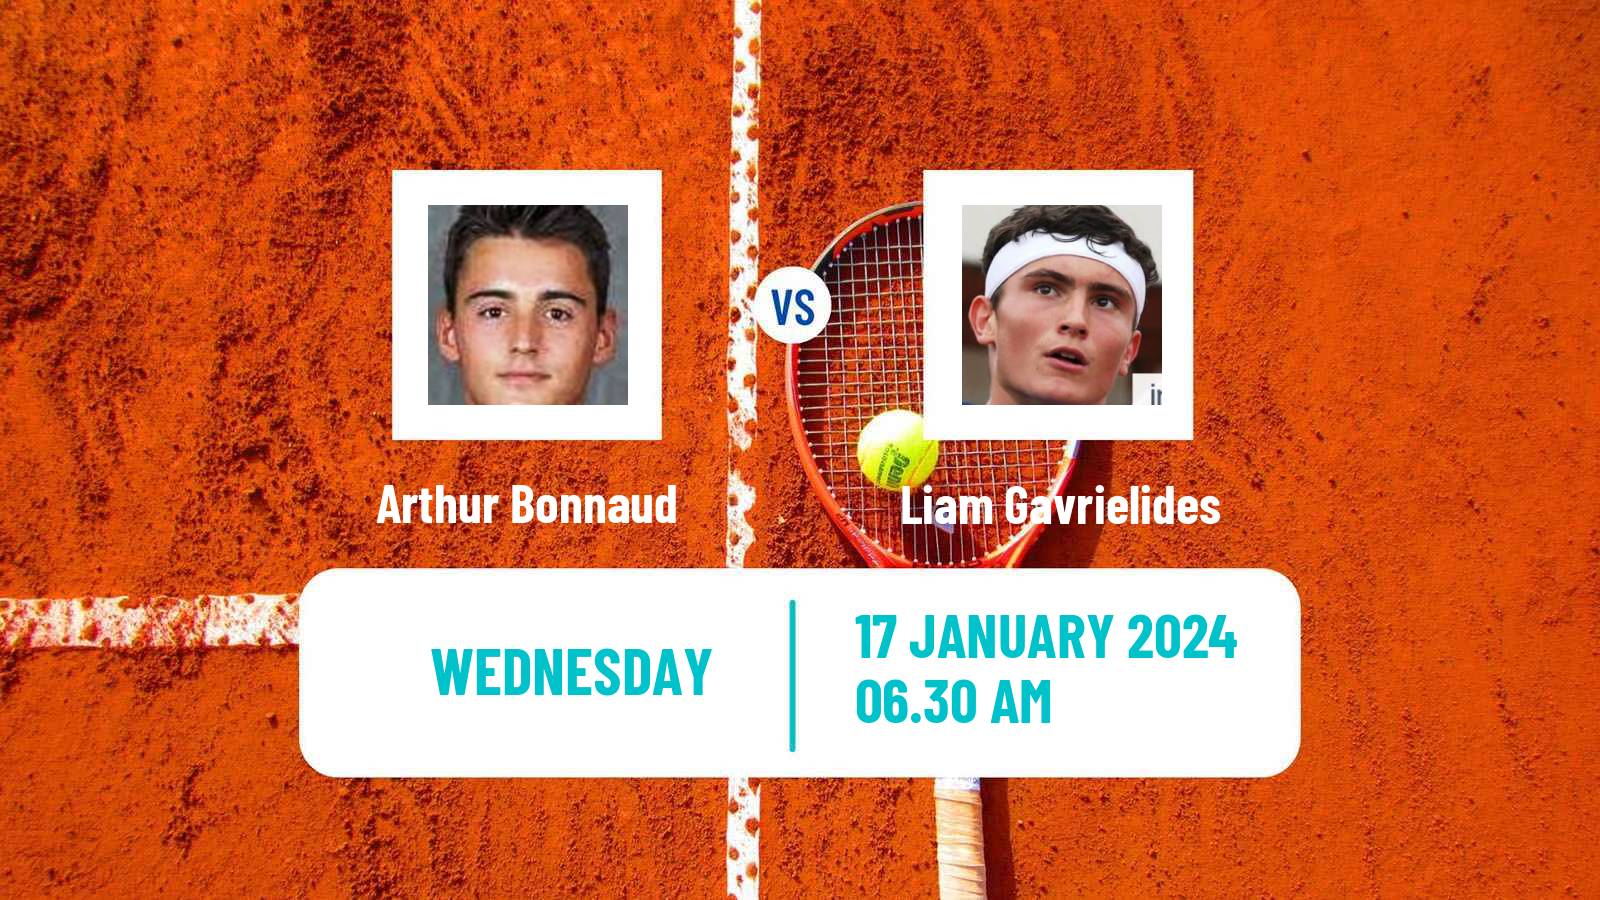 Tennis ITF M15 Manacor 2 Men Arthur Bonnaud - Liam Gavrielides